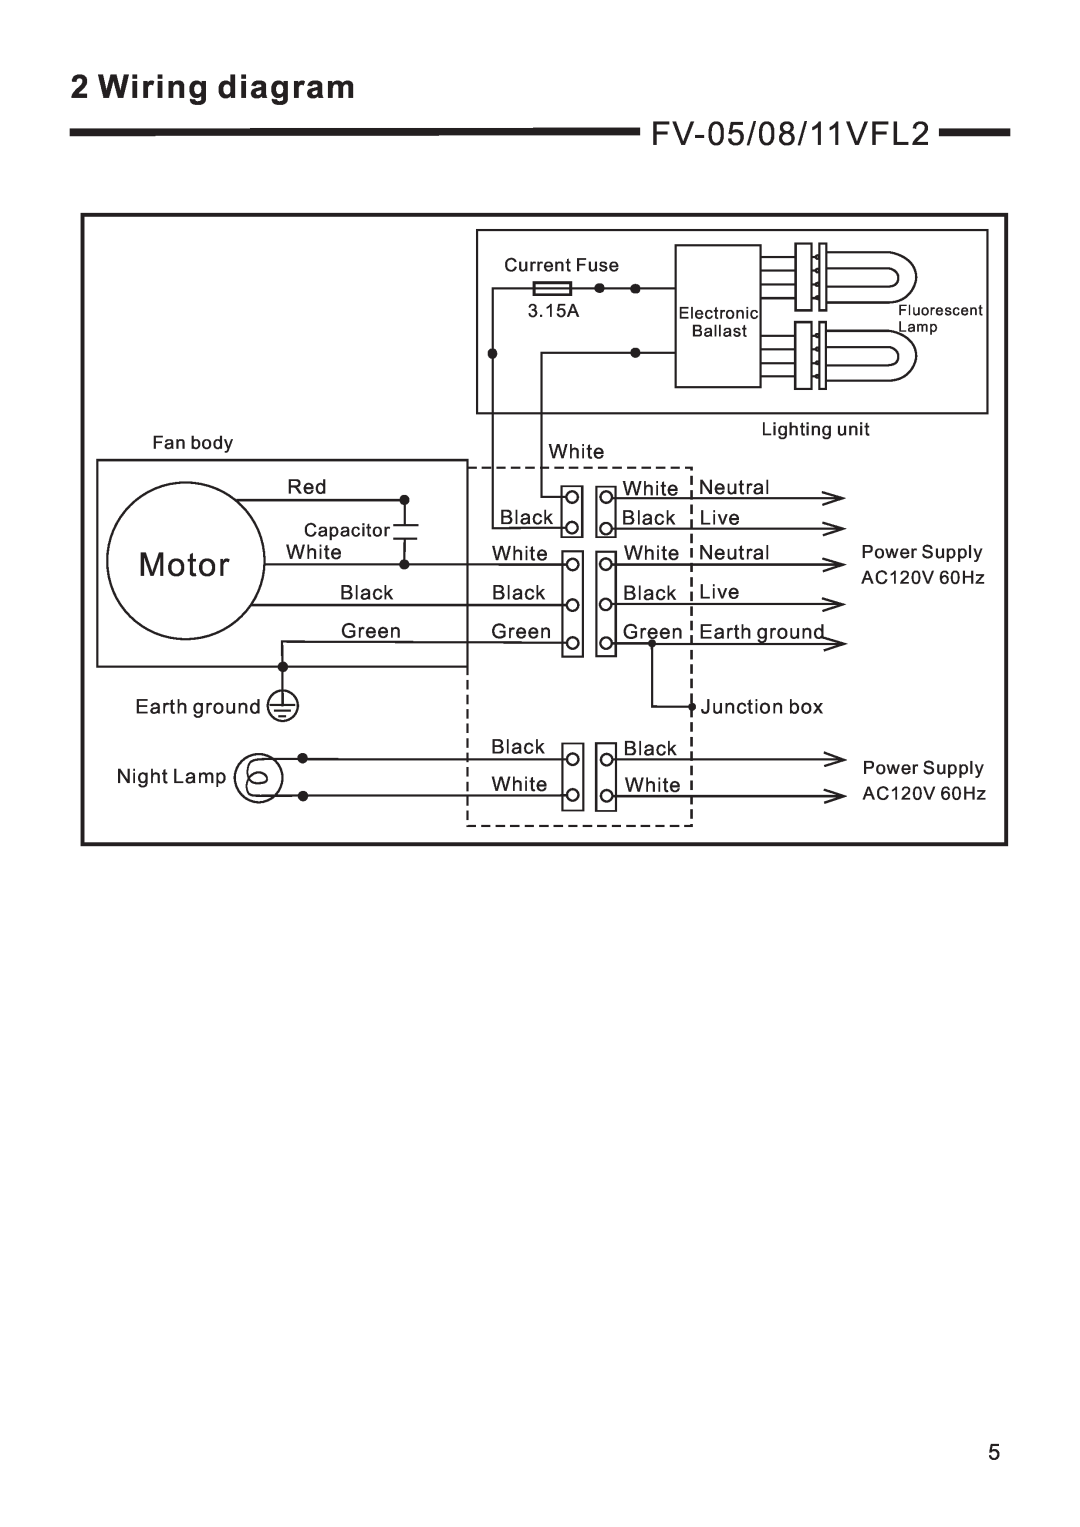 Panasonic FV-05/08/11VFL2 service manual Wiring diagram, Motor 